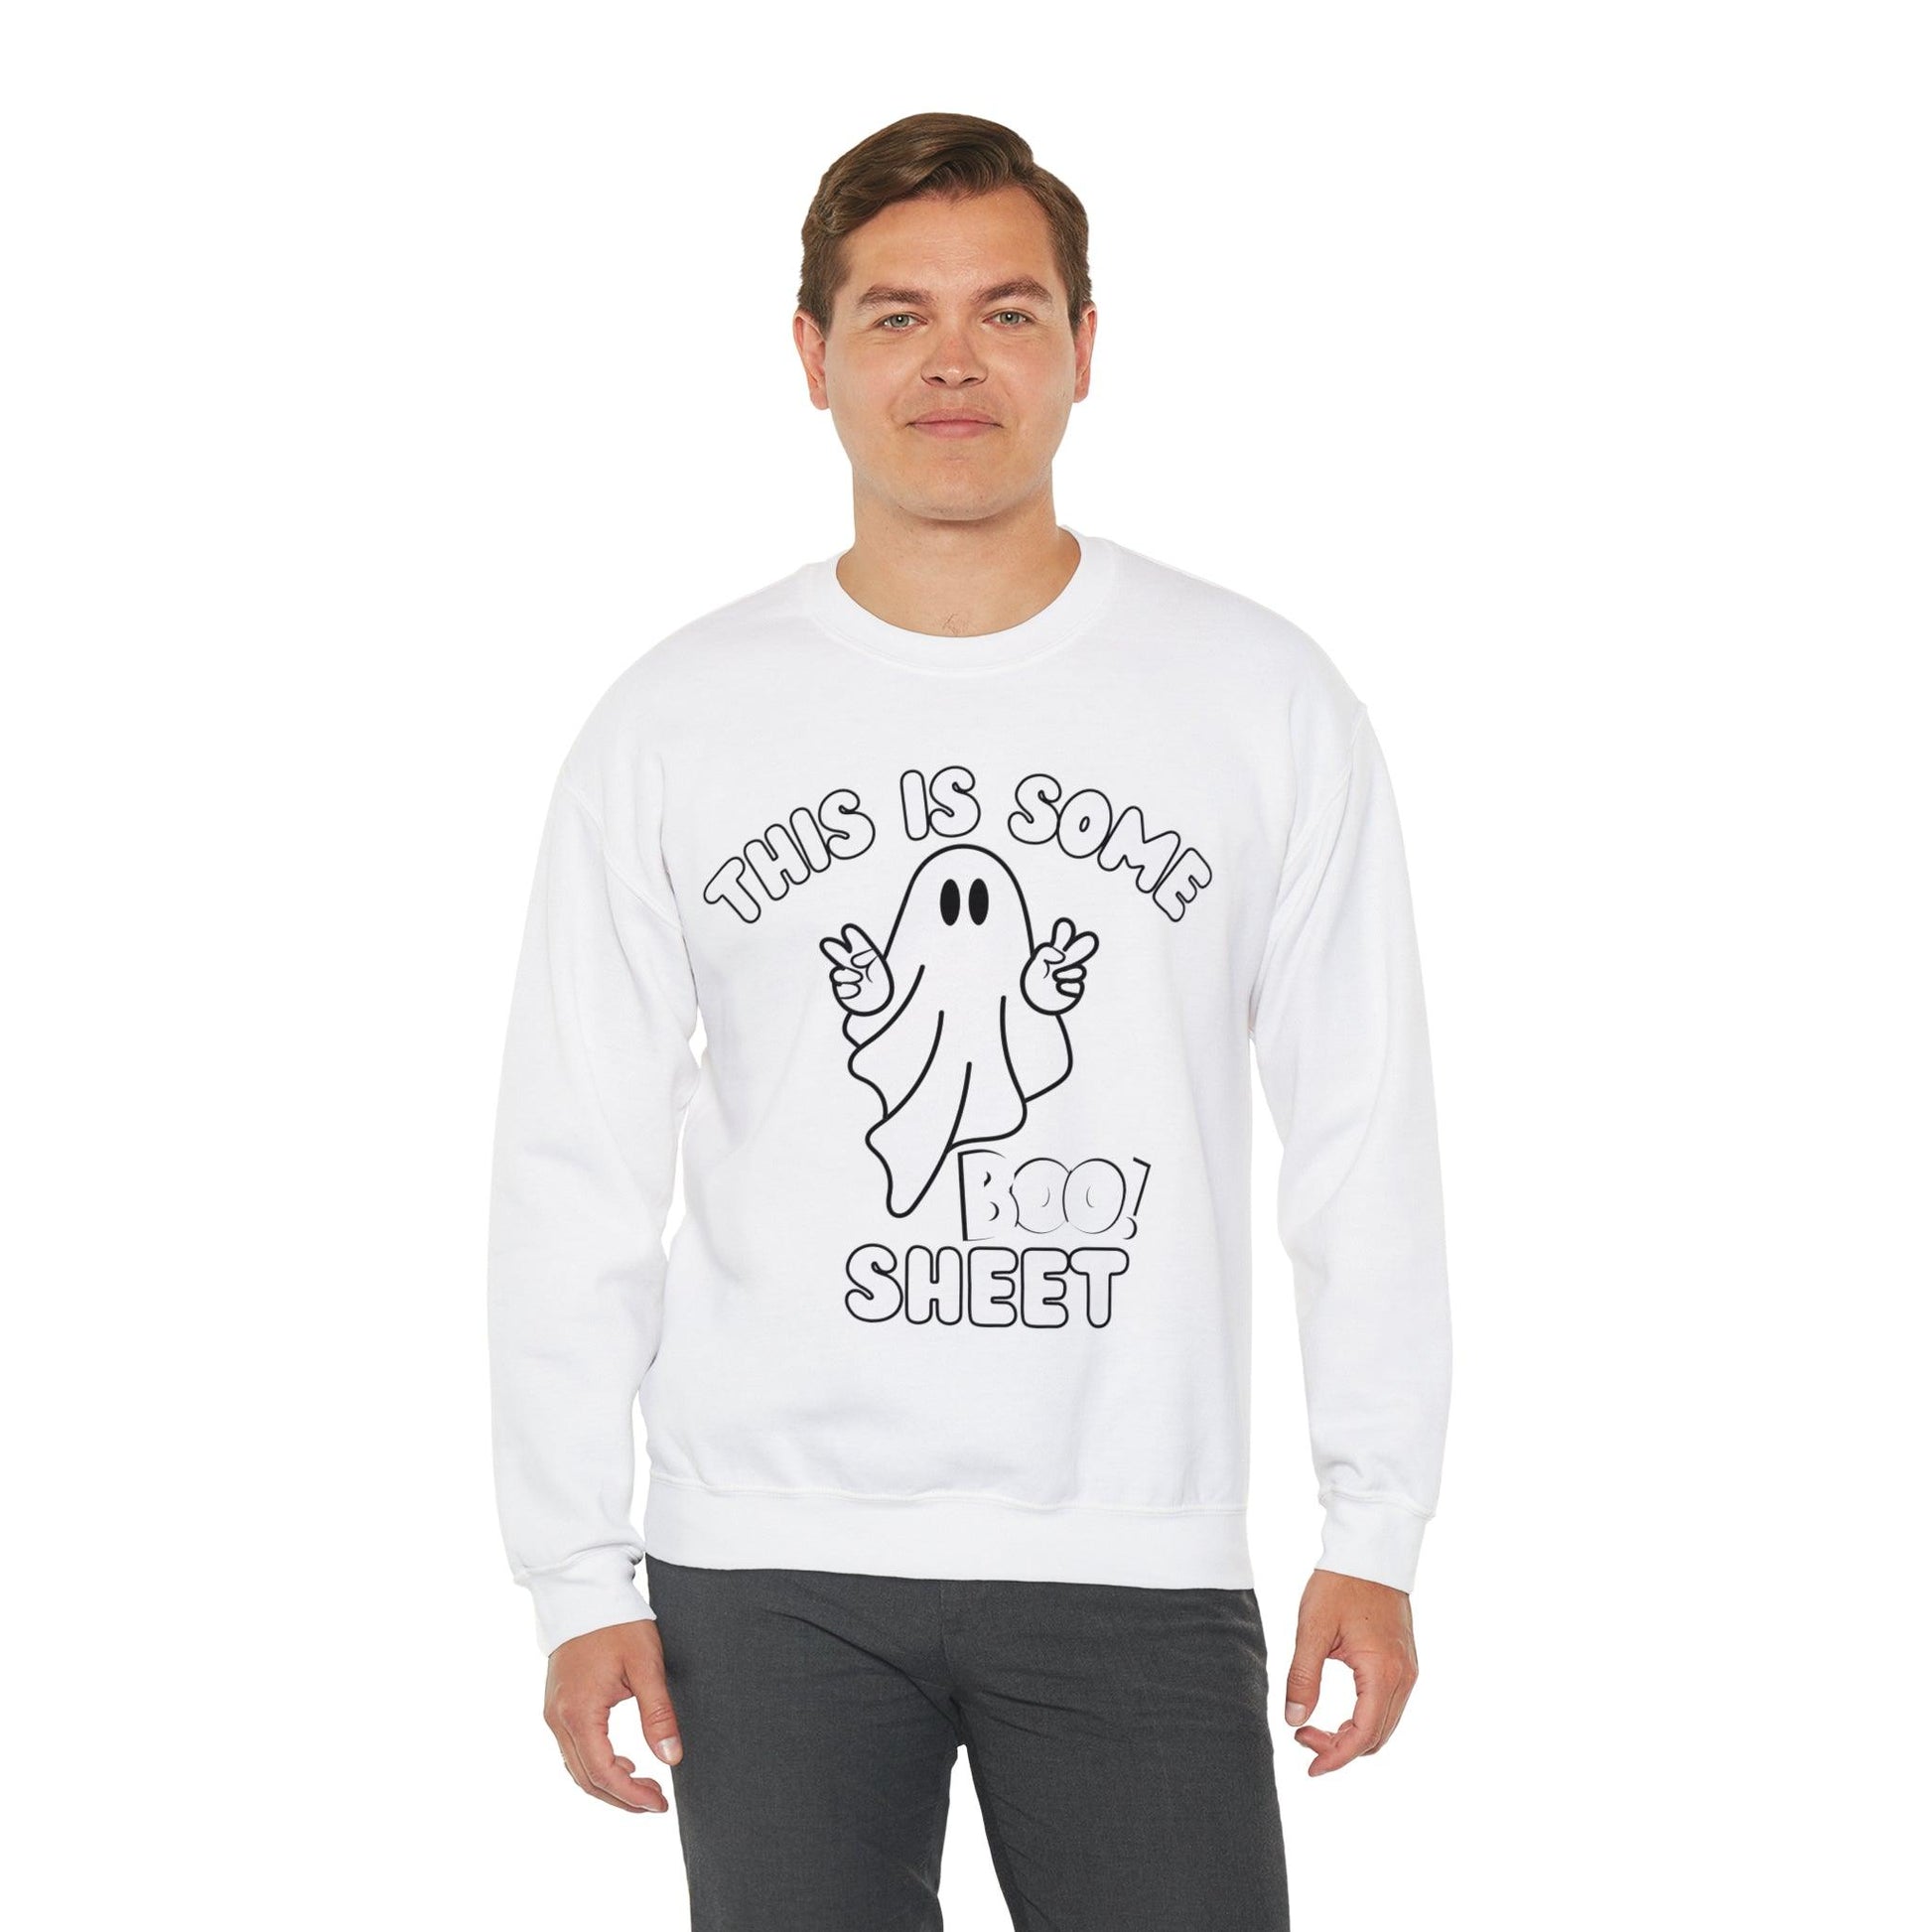 This Is Some Boo Sheet Ghost Sweatshirt Cute Ghost Sweatshirt Boo Ghost Sweatshirt Gift Shirt Funny Halloween Shirt Spooky Season Shirt - Giftsmojo